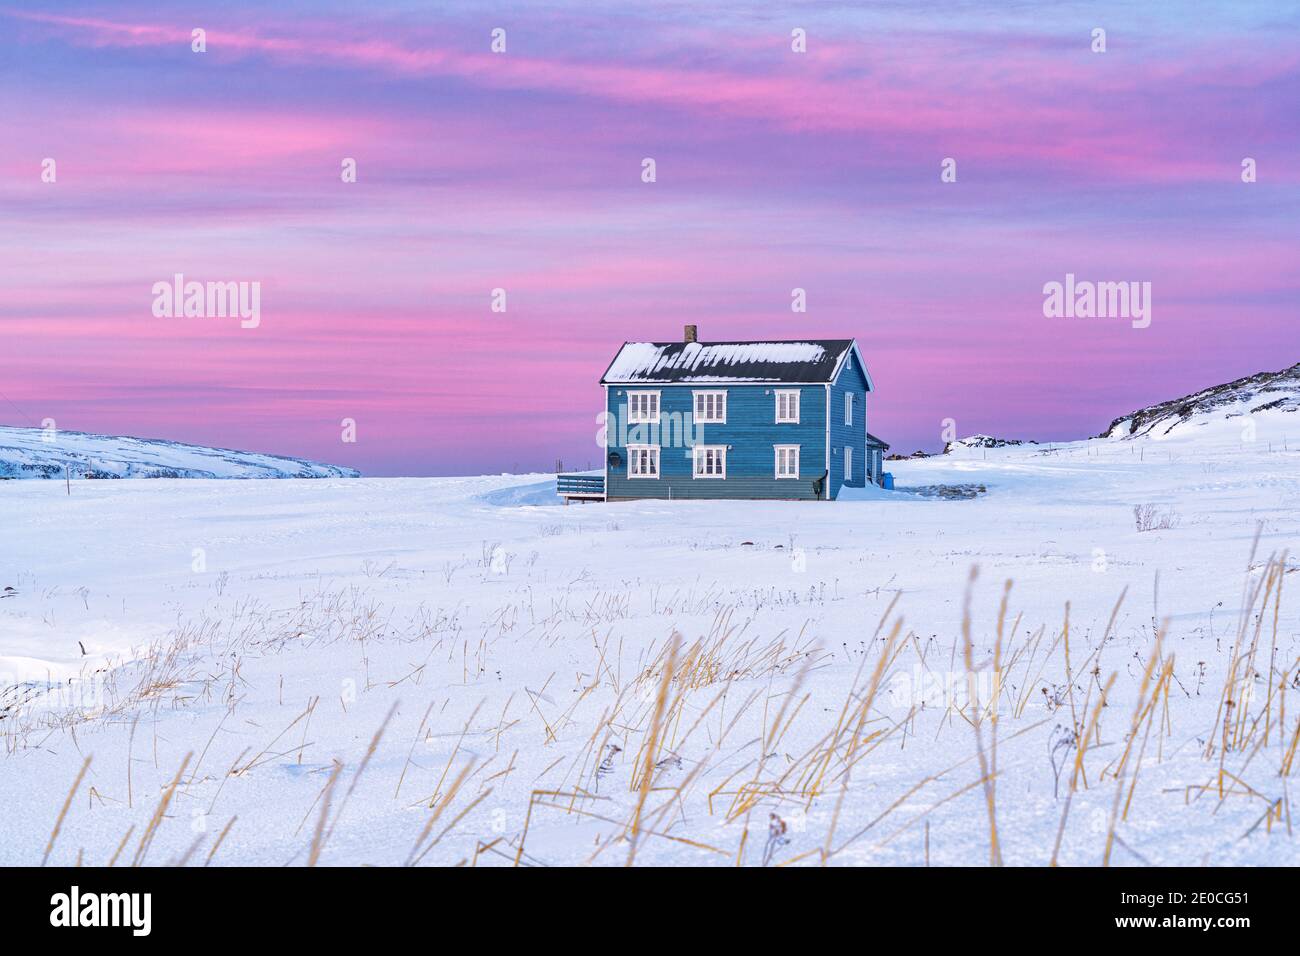 Isoliertes Haus im Schnee unter dem rosa arktischen Sonnenuntergang, Veines, Kongsfjord, Varanger Halbinsel, Troms Og Finnmark, Norwegen, Skandinavien, Europa Stockfoto